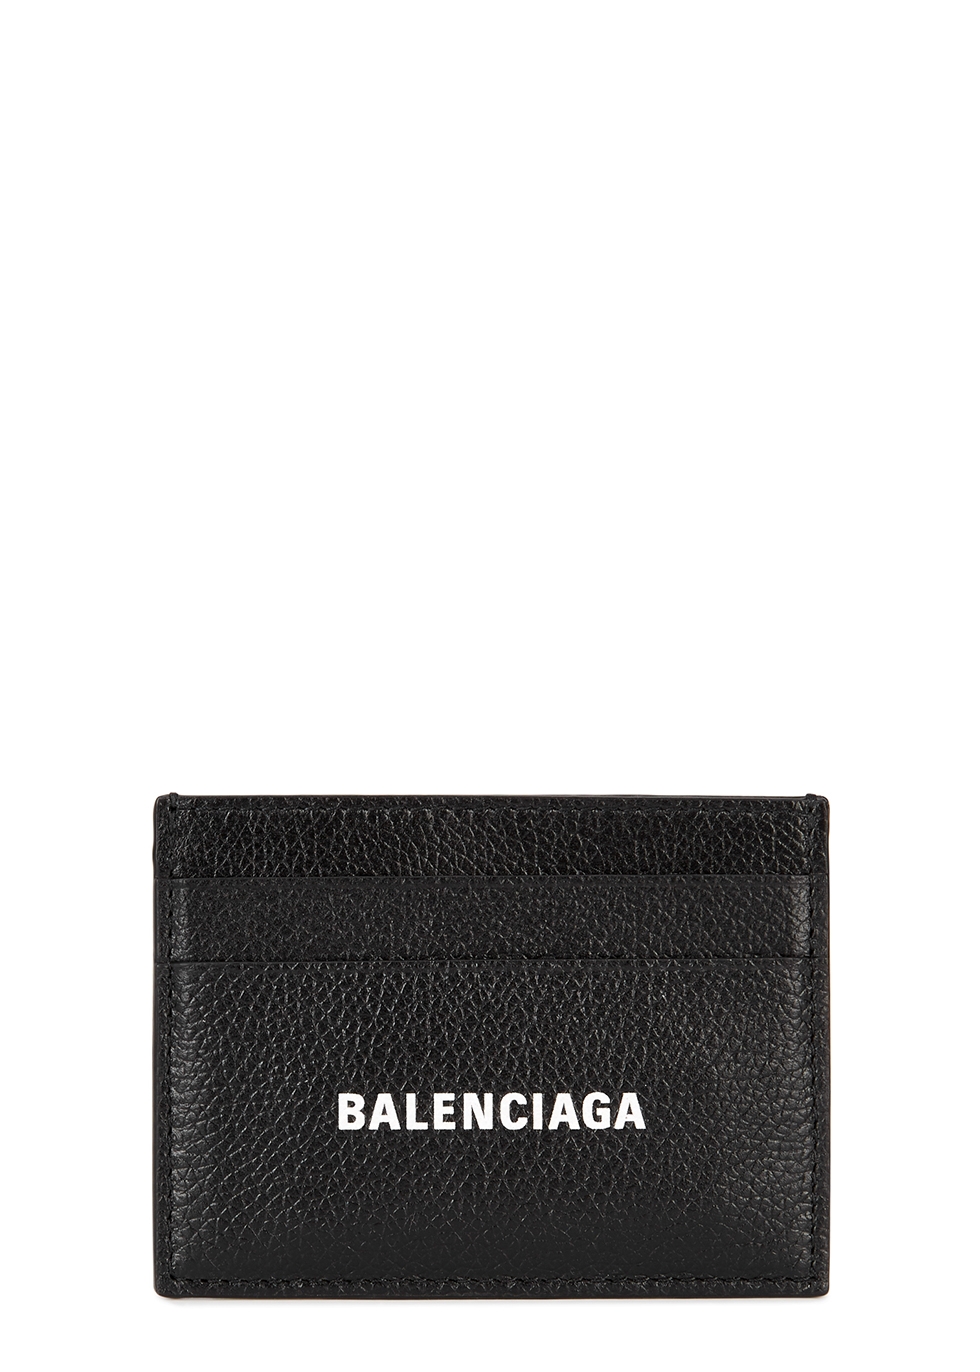 Balenciaga Black logo leather card holder - Harvey Nichols